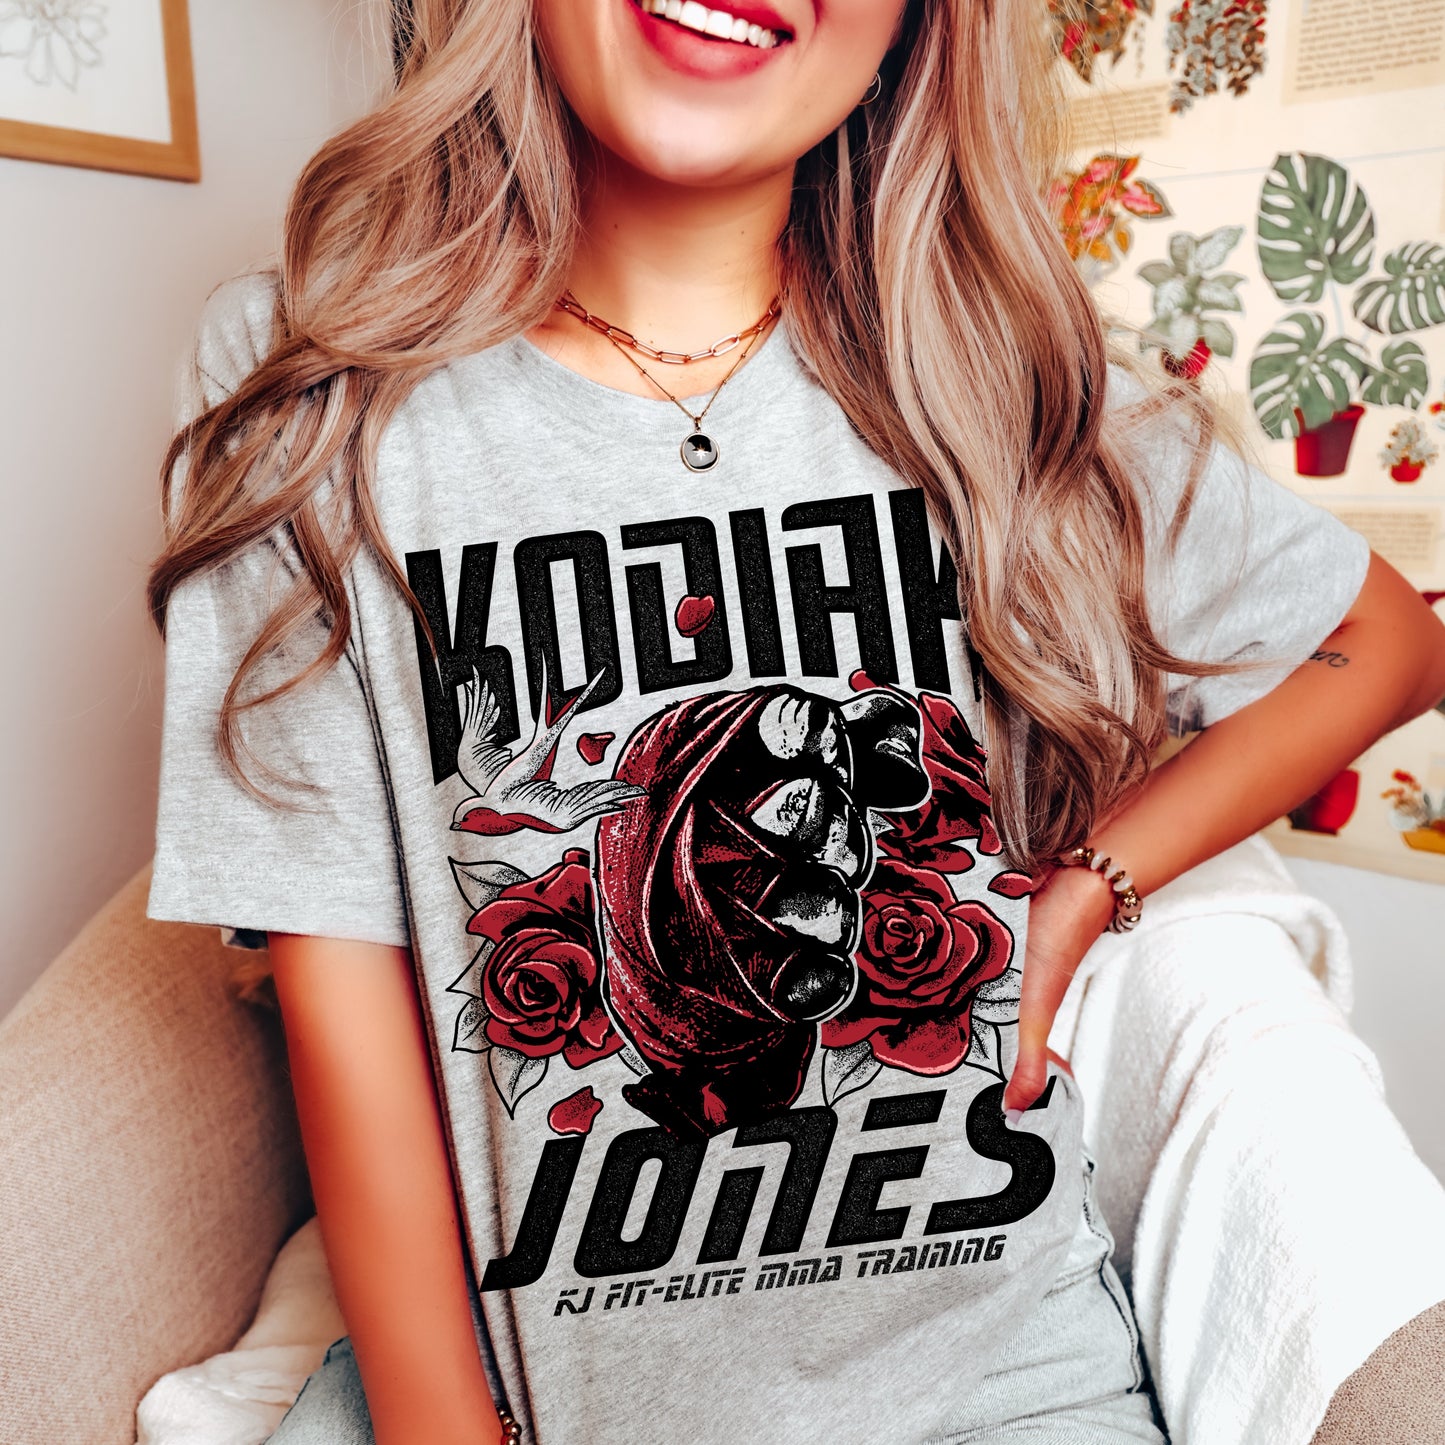 Kodiak Jones Shirt | Madison Kate Merch